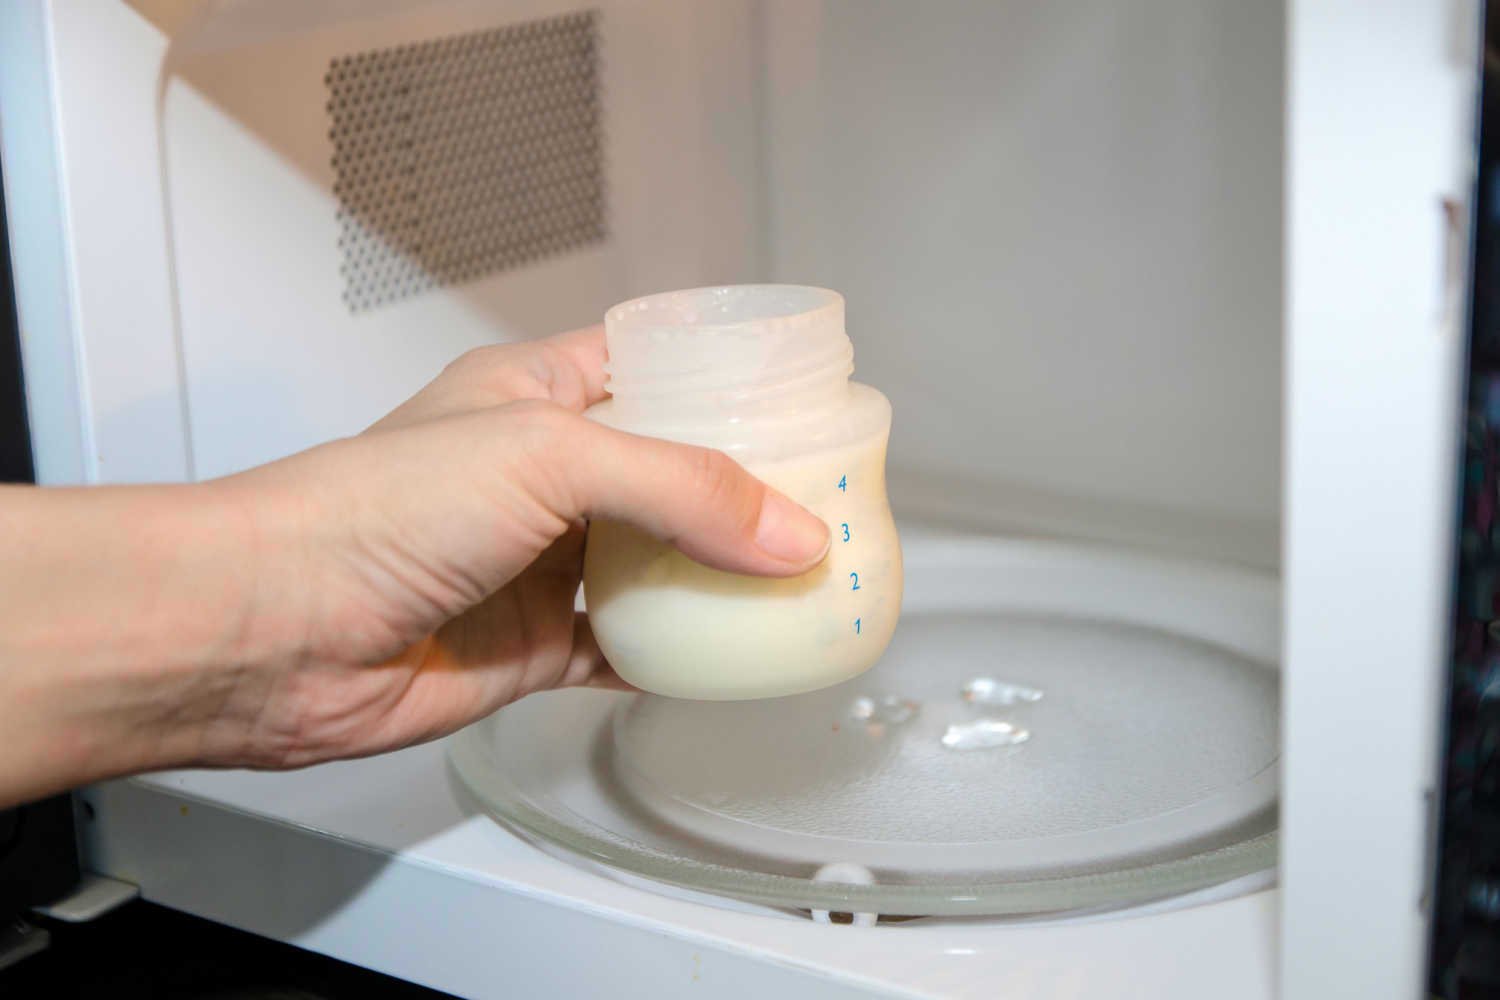 Risks Heating Baby Food in Microwave